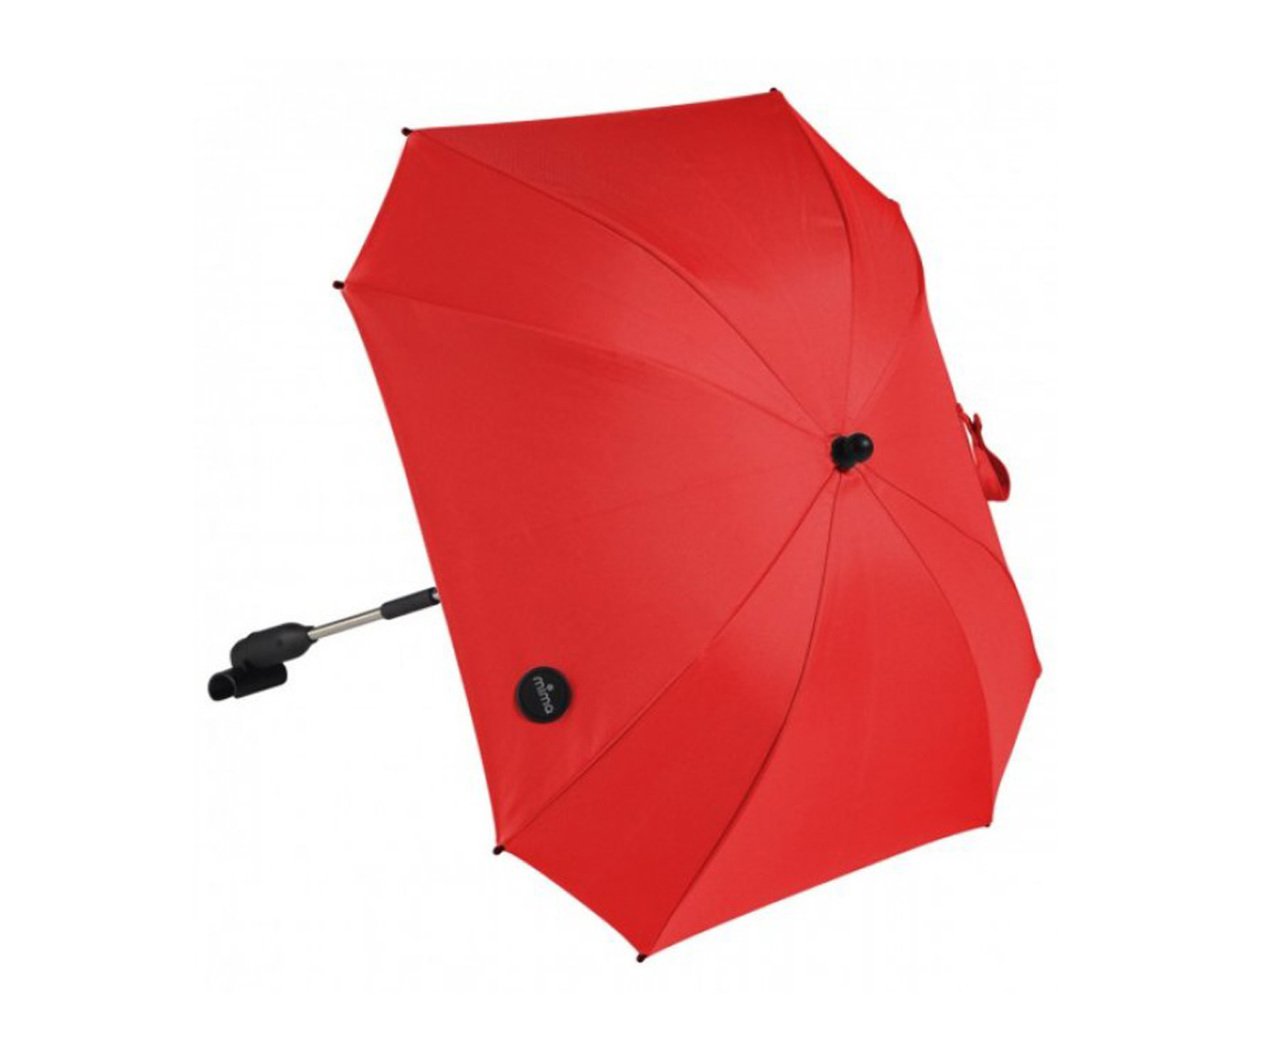 mima şemsiye – mima parasol